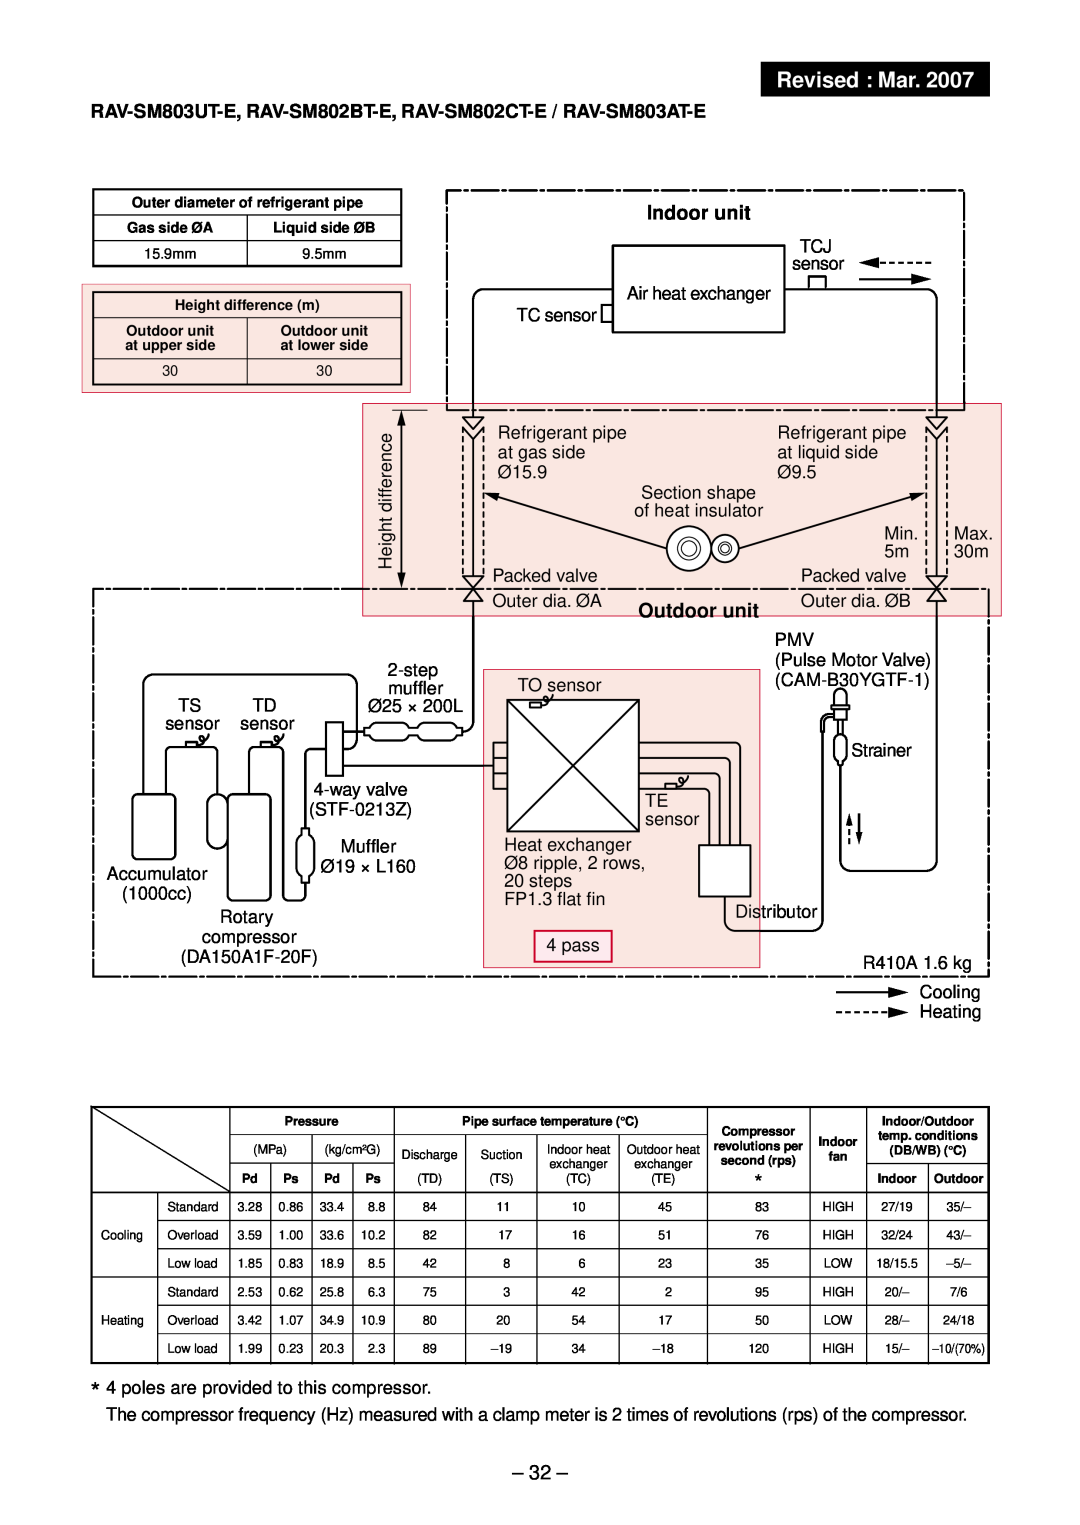 Toshiba RAV-SM1103UT-E Revised Mar, Indoor unit, RAV-SM803UT-E, RAV-SM802BT-E, RAV-SM802CT-E / RAV-SM803AT-E, Outdoor unit 